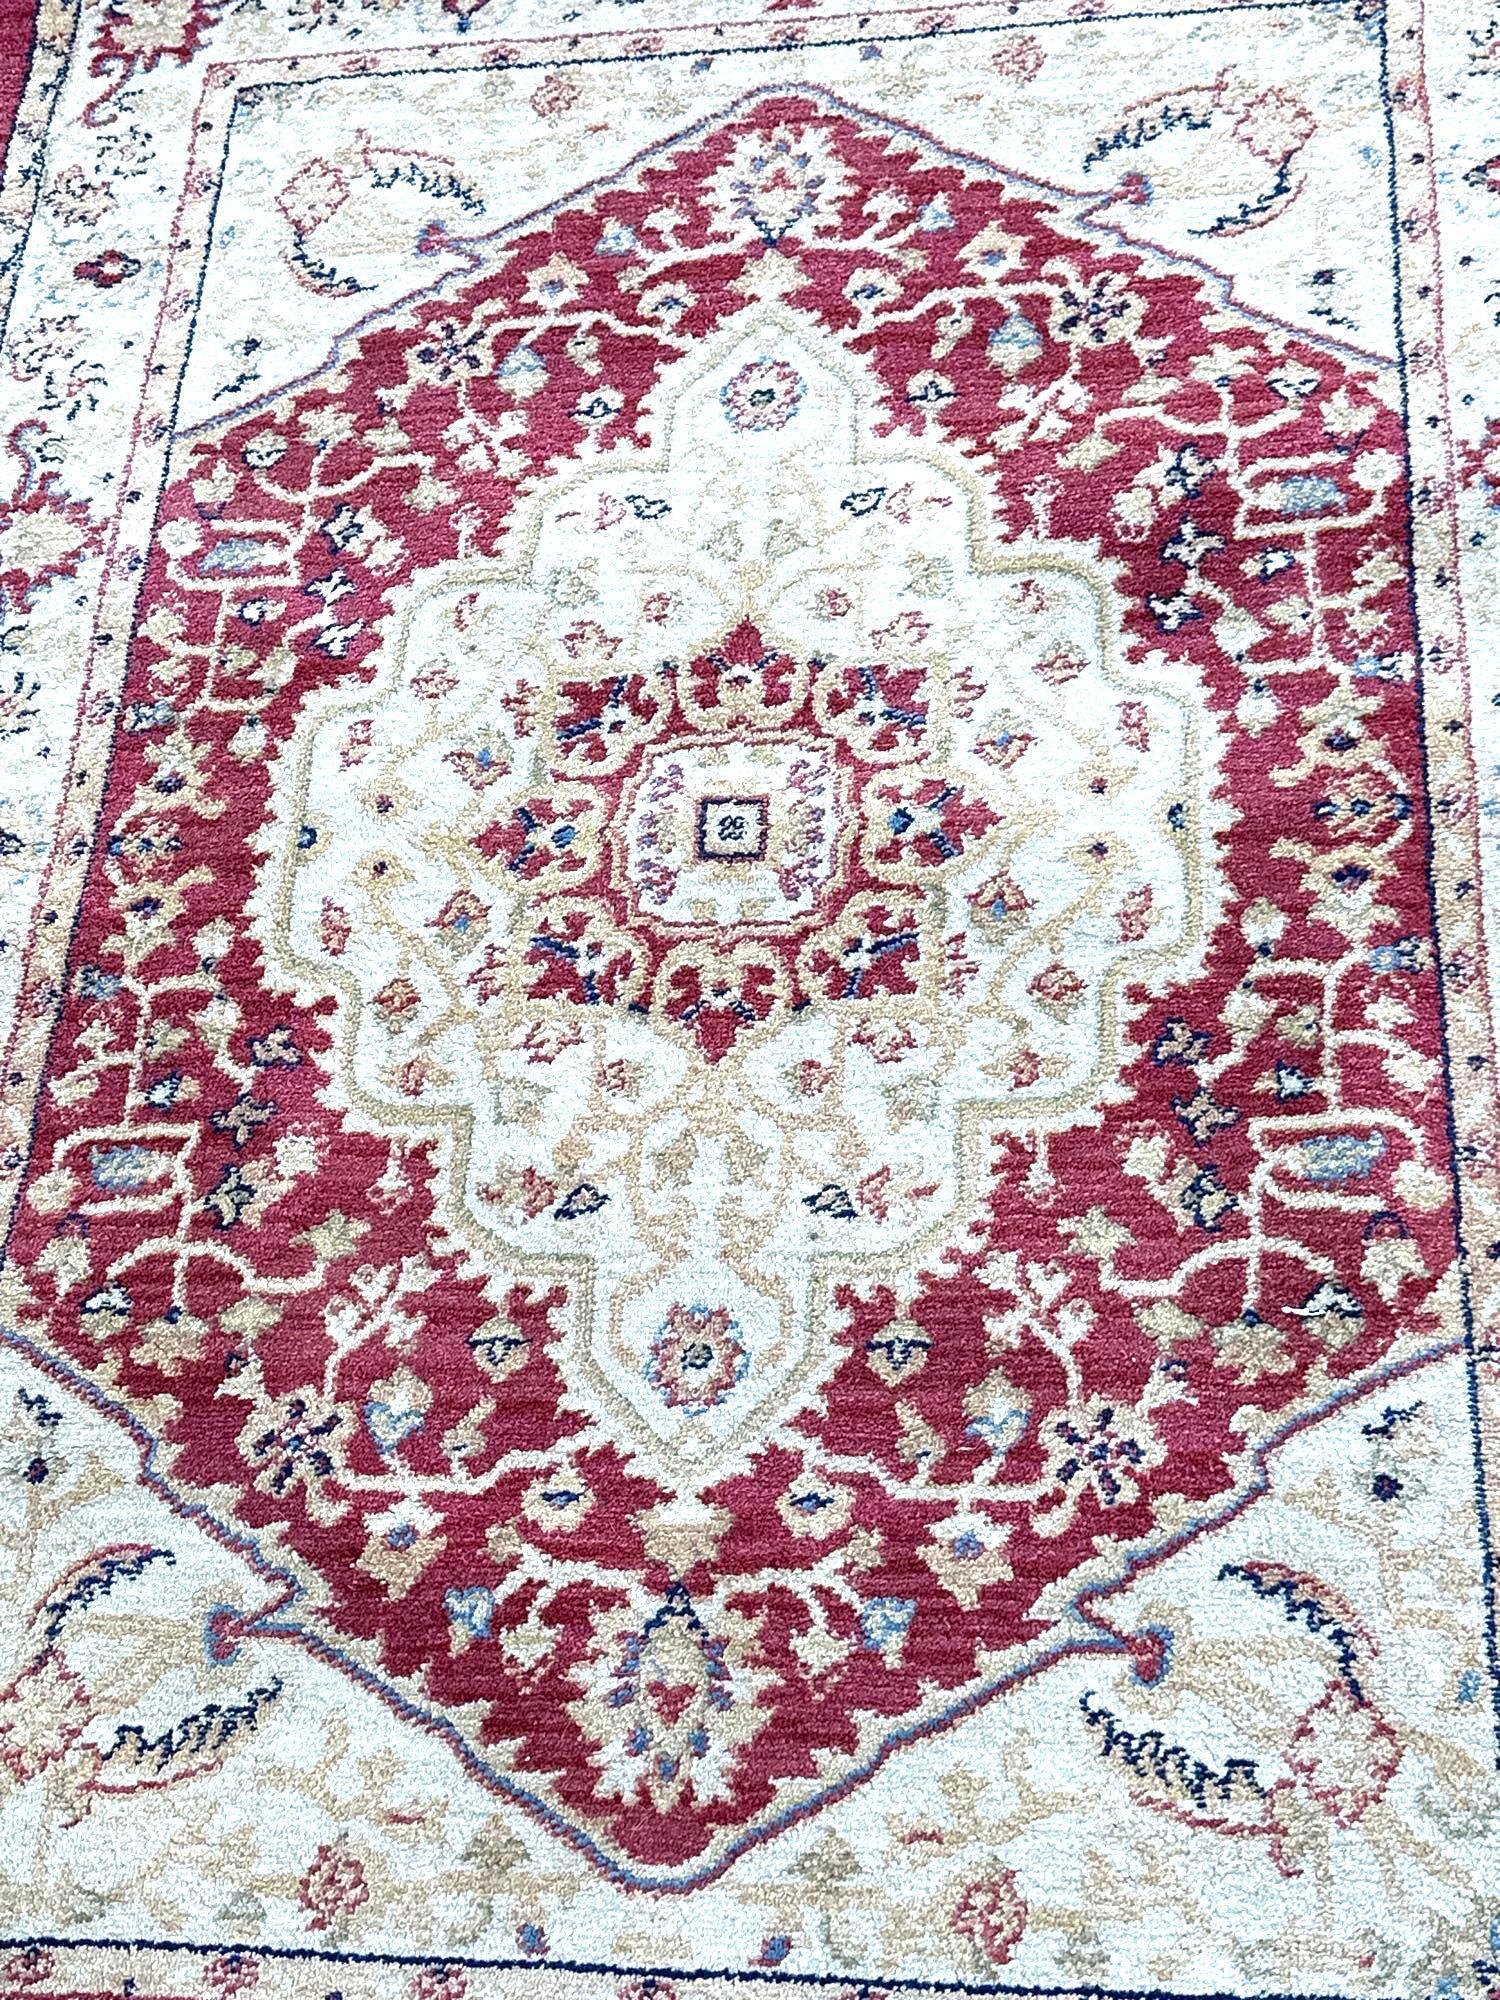 Safavieh Carpet from Turkey 4' x 5'7"